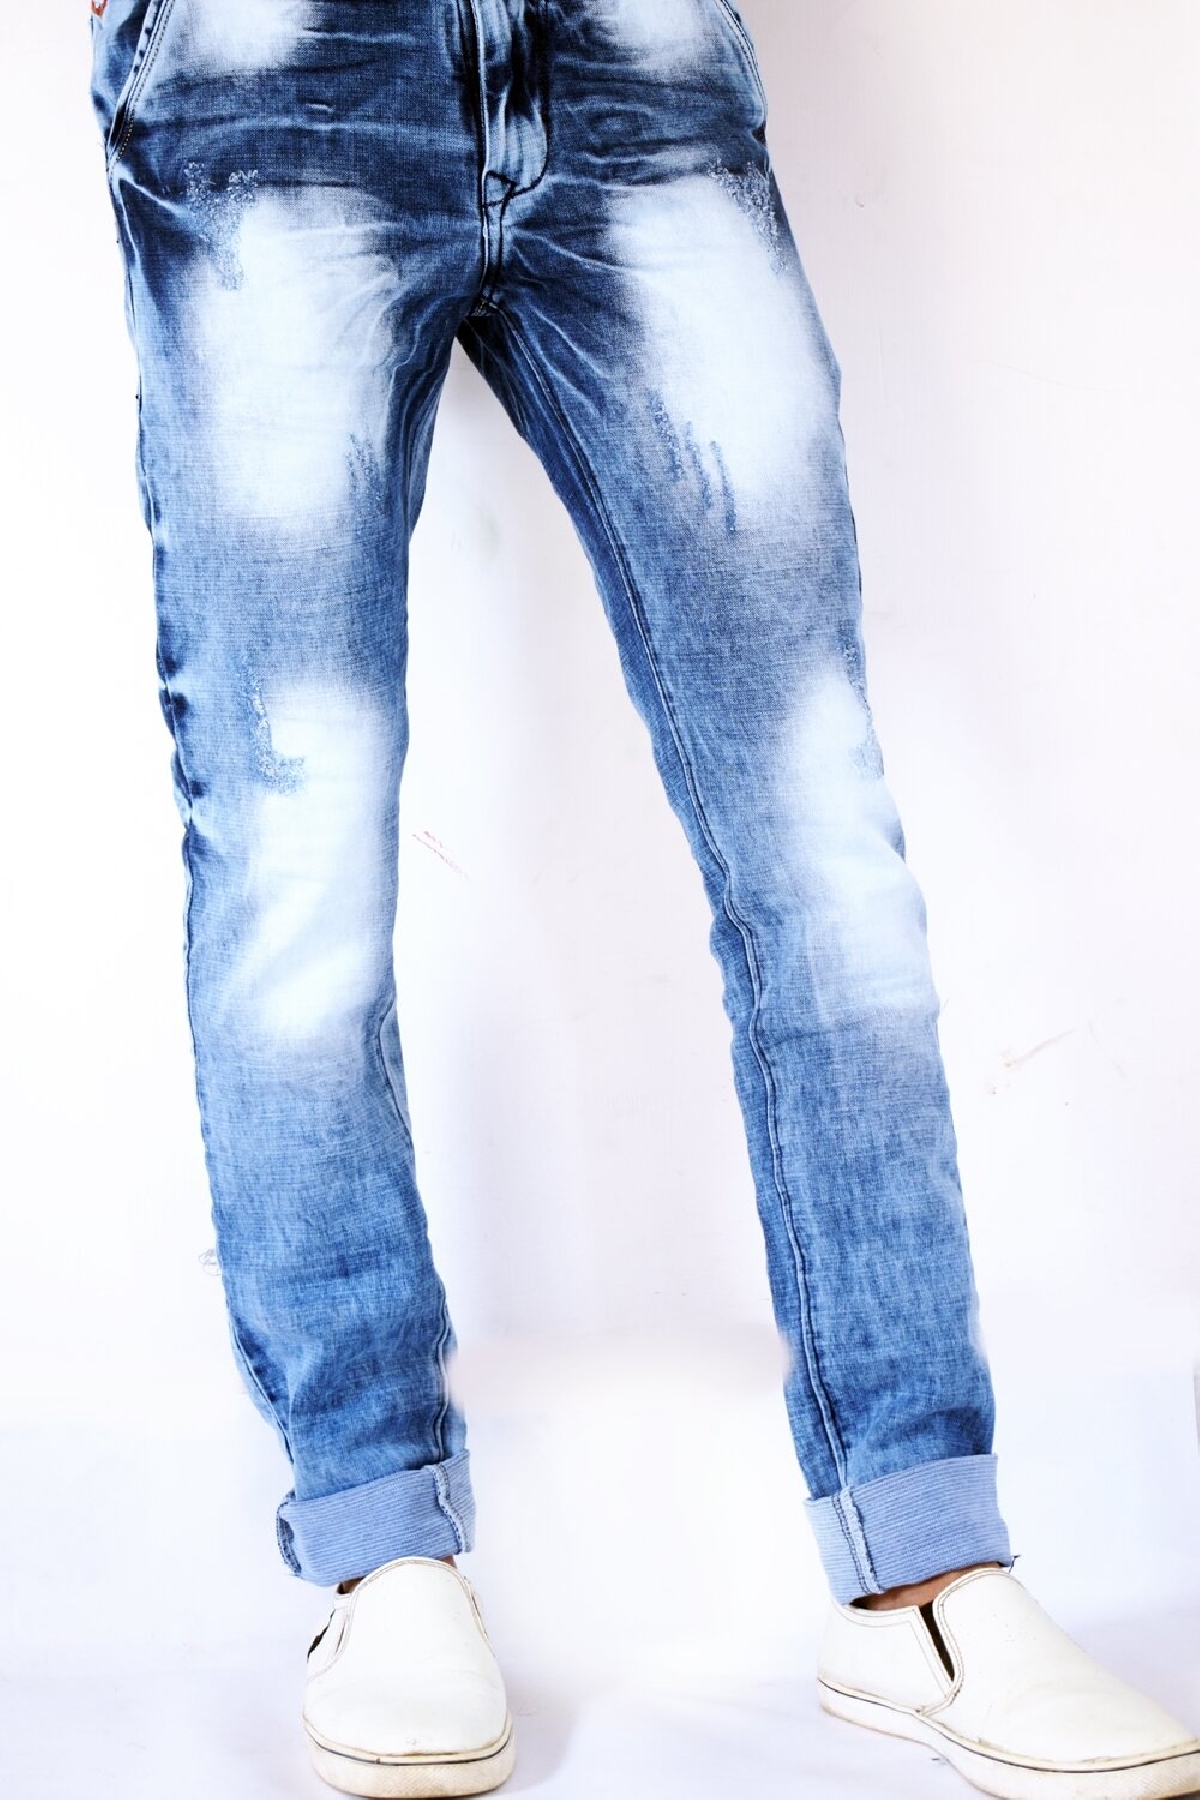 sparky jeans 32 size price